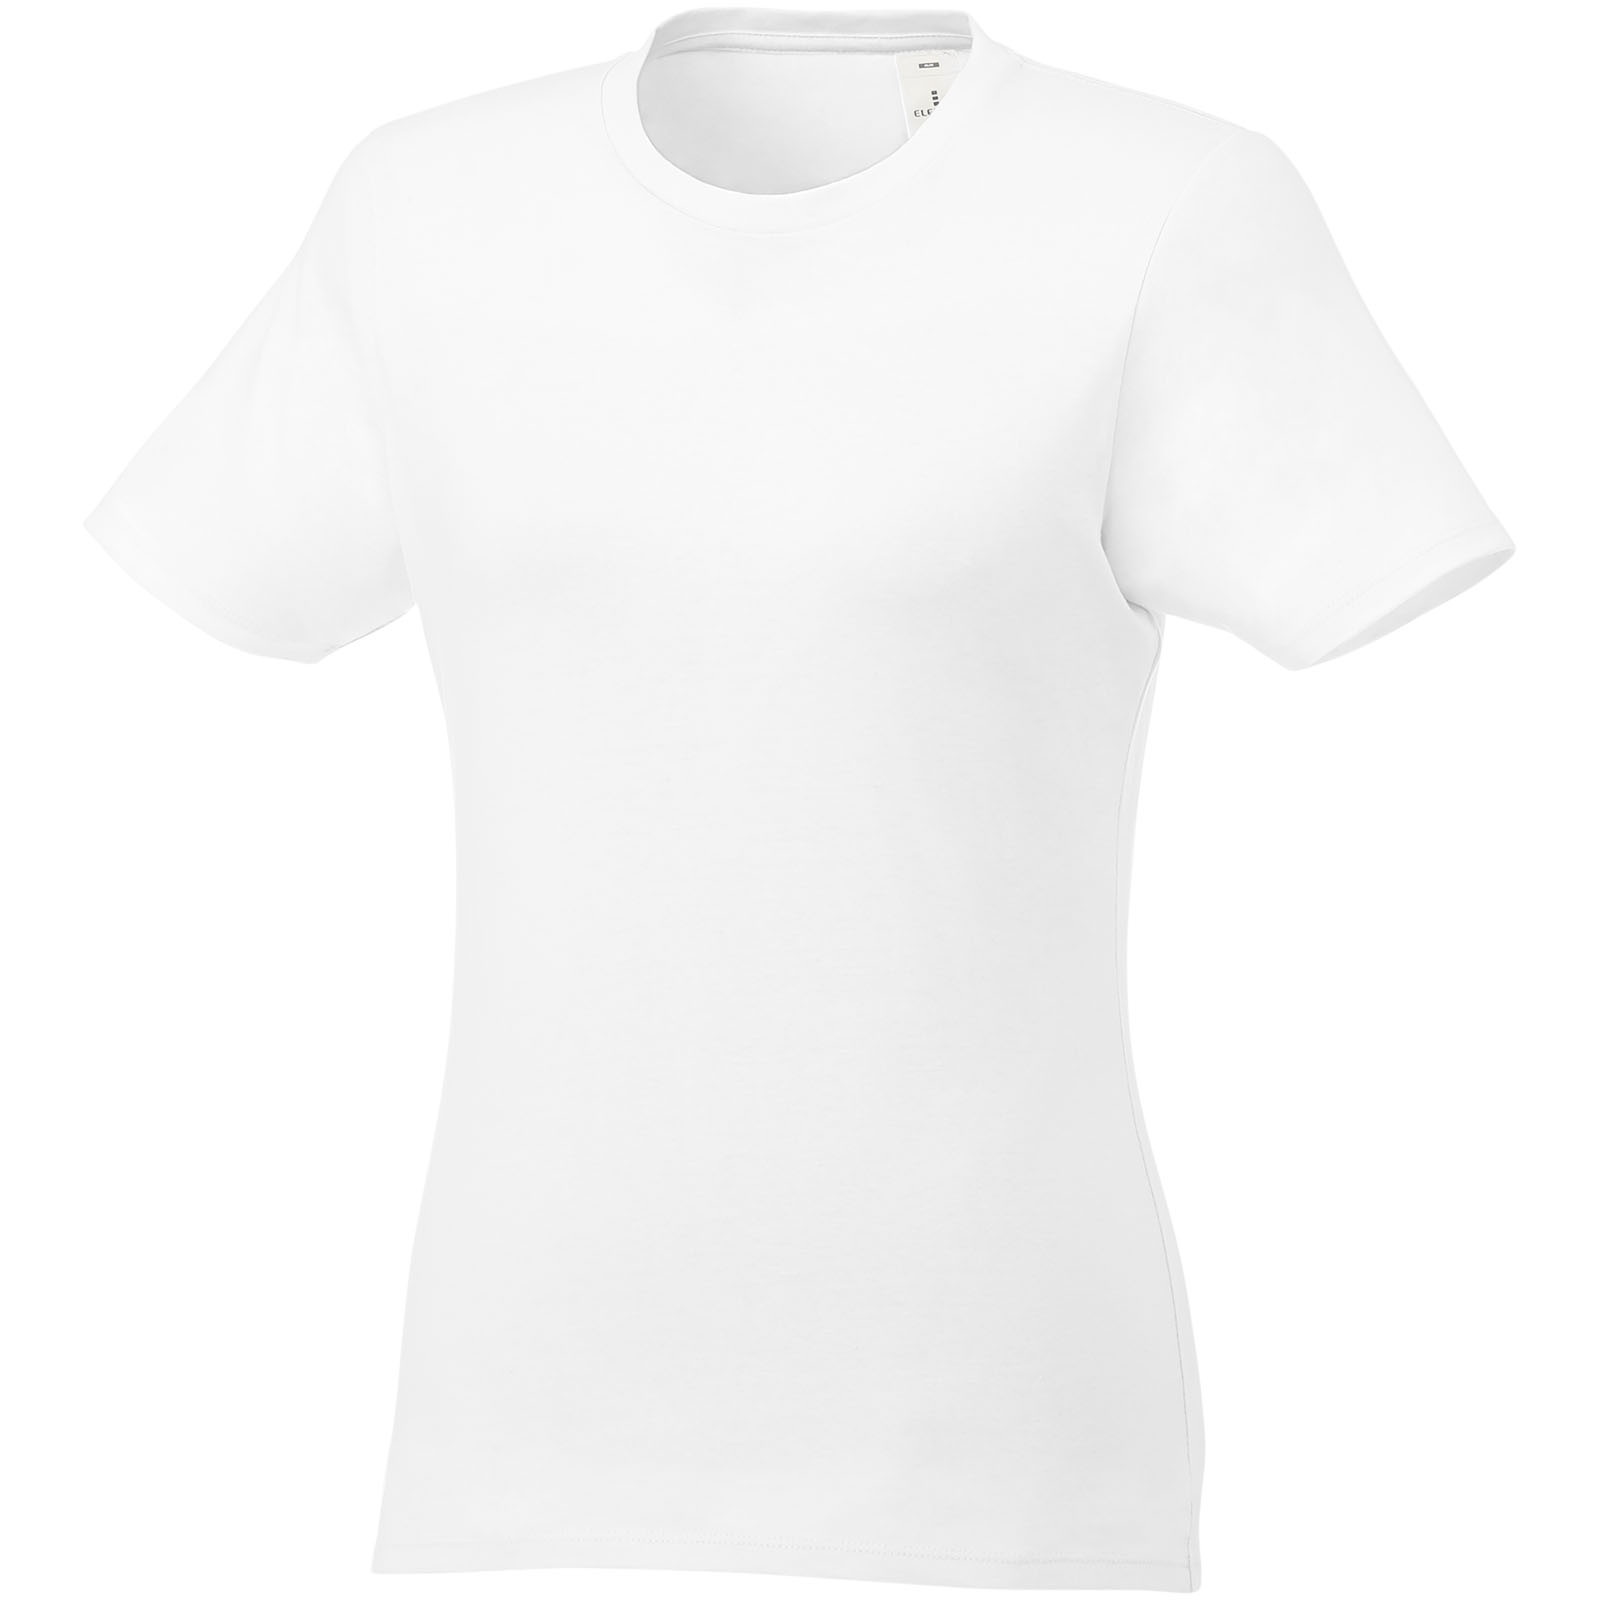 Advertising T-shirts - Heros short sleeve women's t-shirt